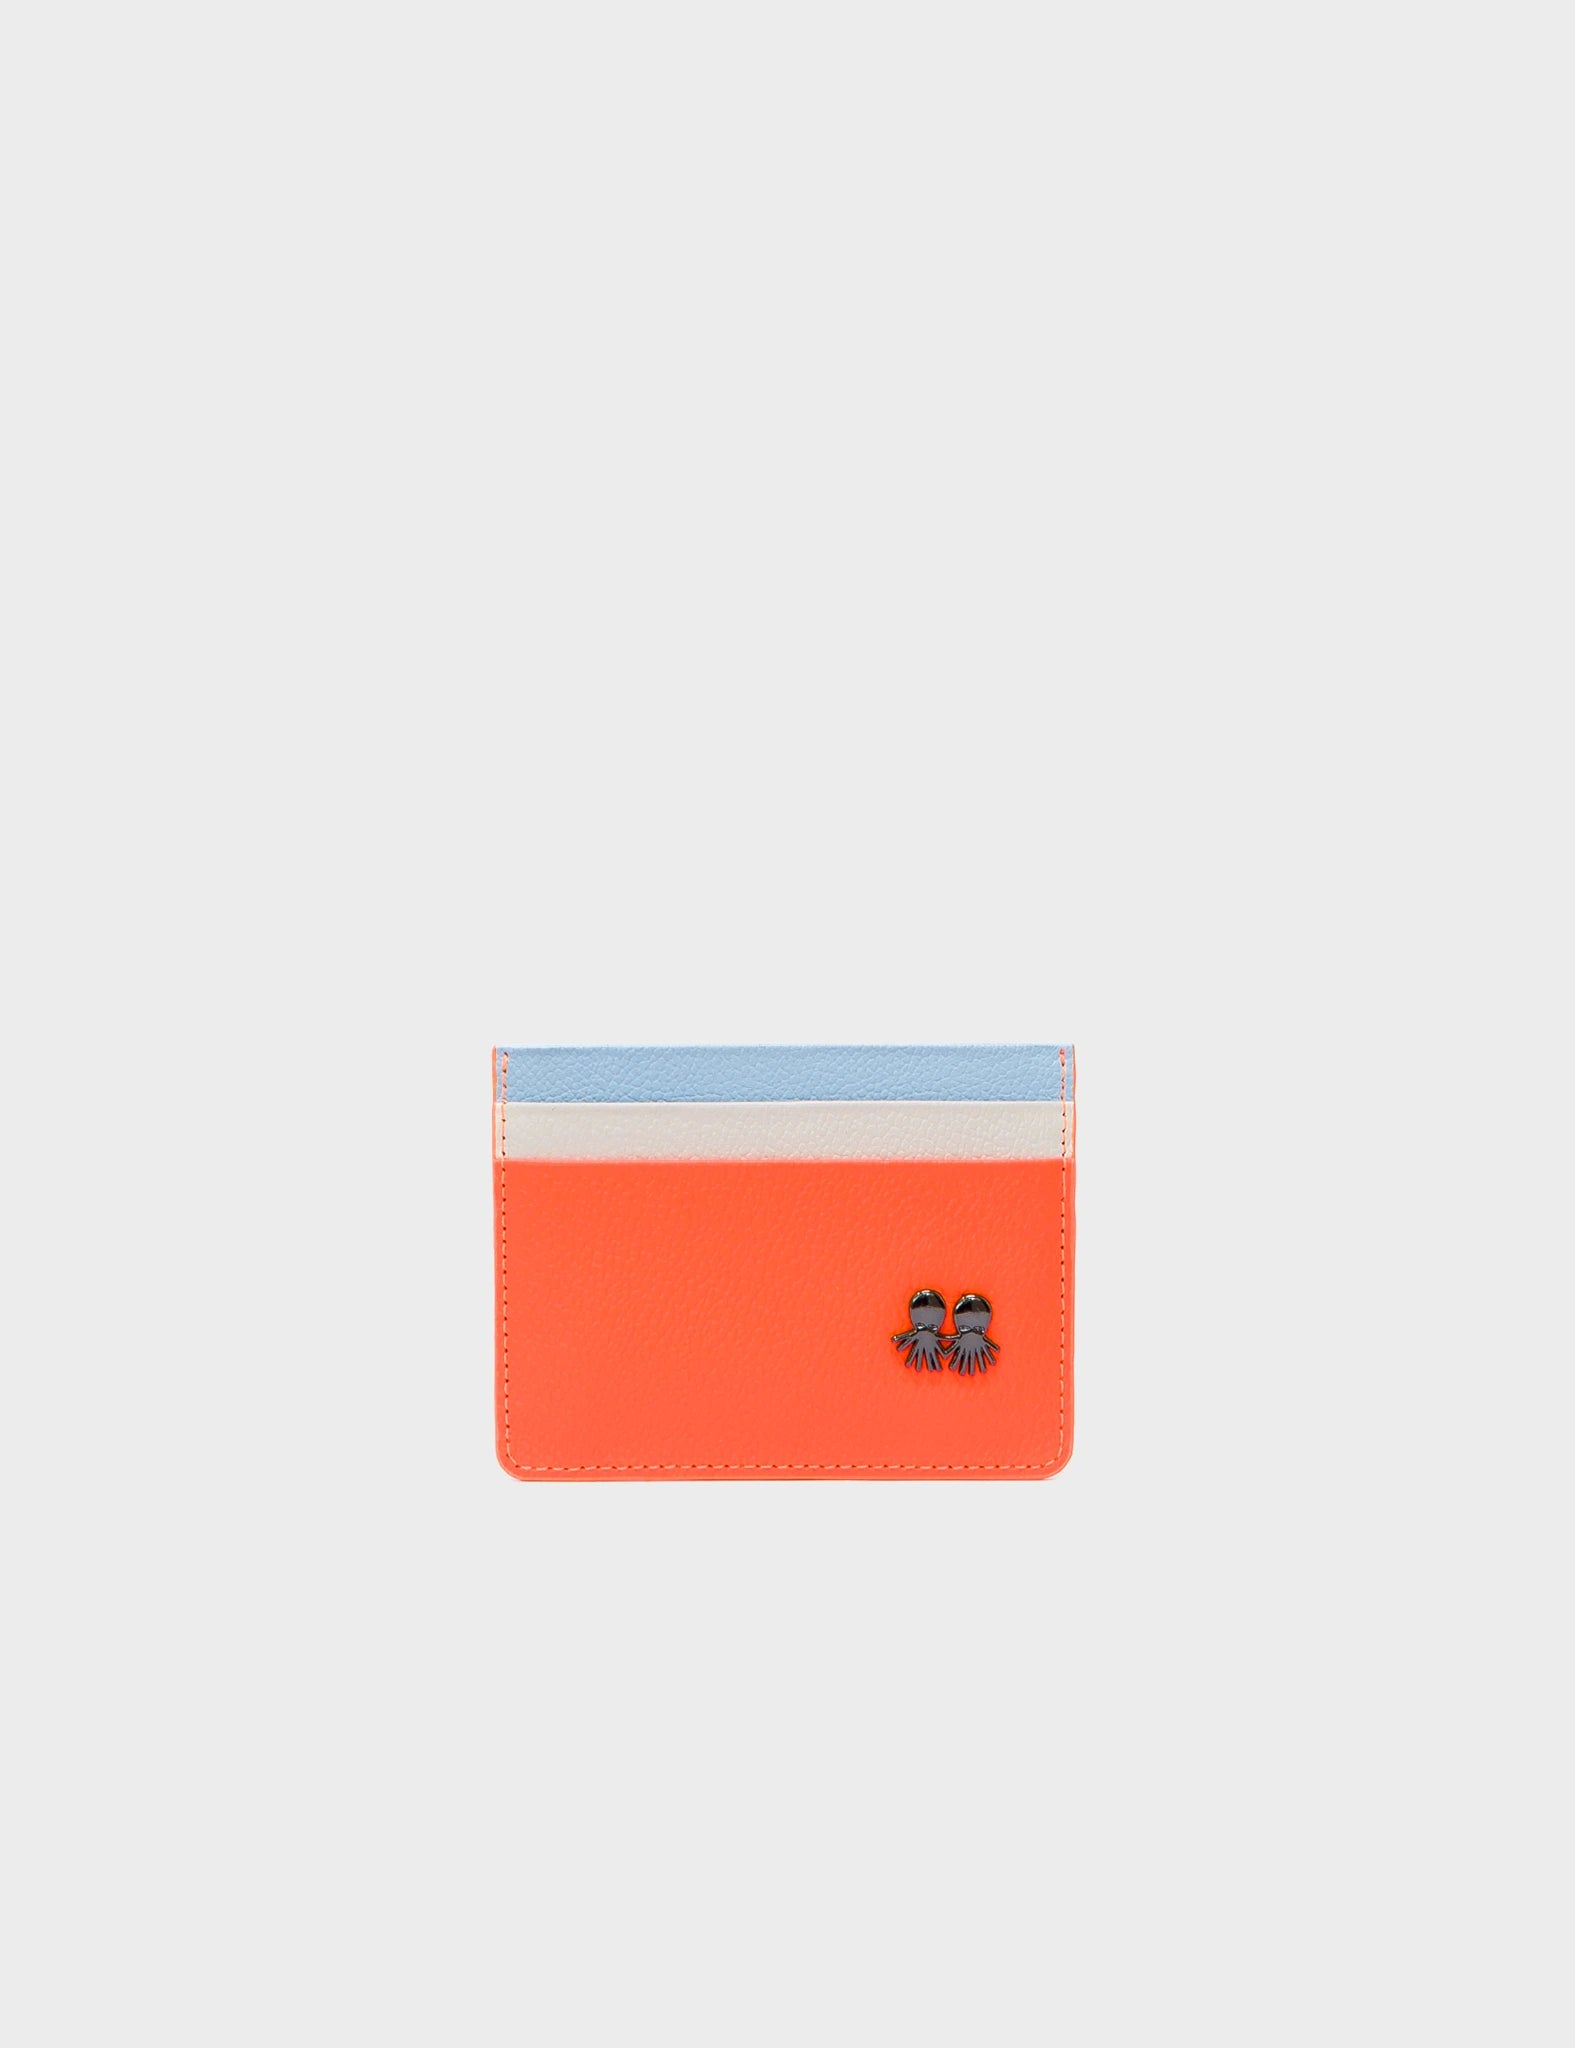 Filium Wallet Neon Orange And Cream Leather Cardholder - Eyes Pattern Debossed